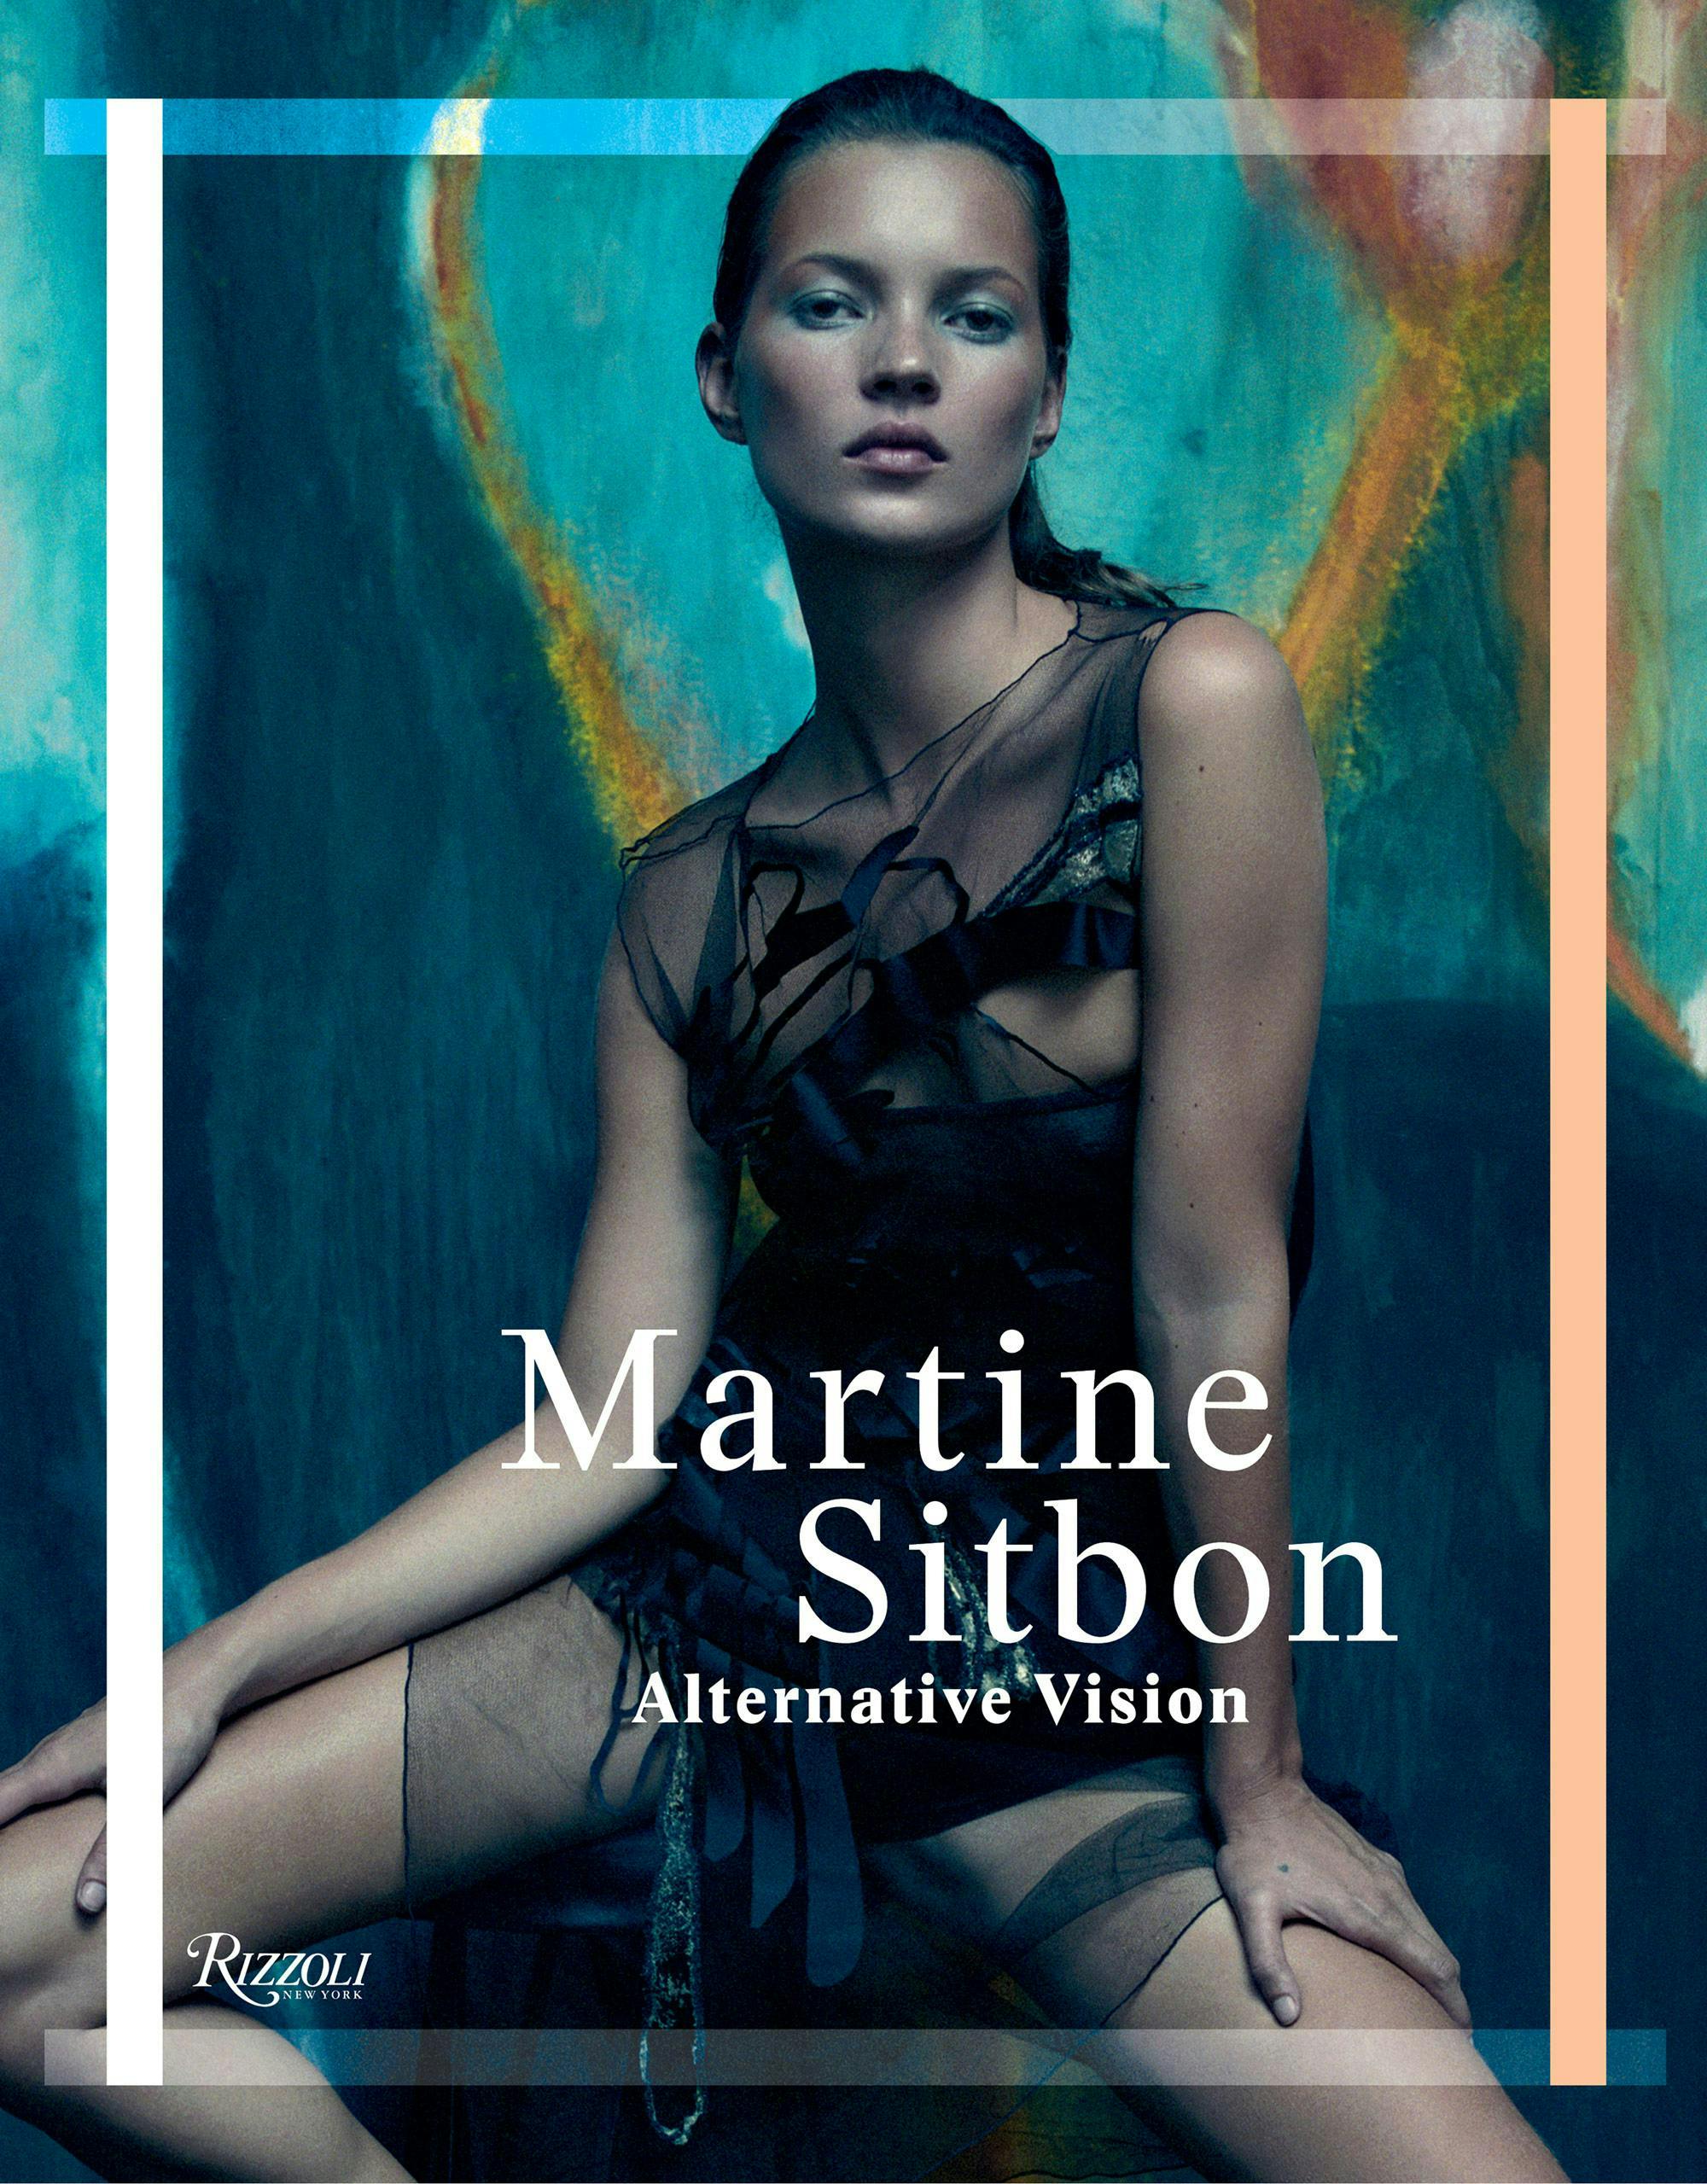 model kate moss for martine sitbon alternative vision cover